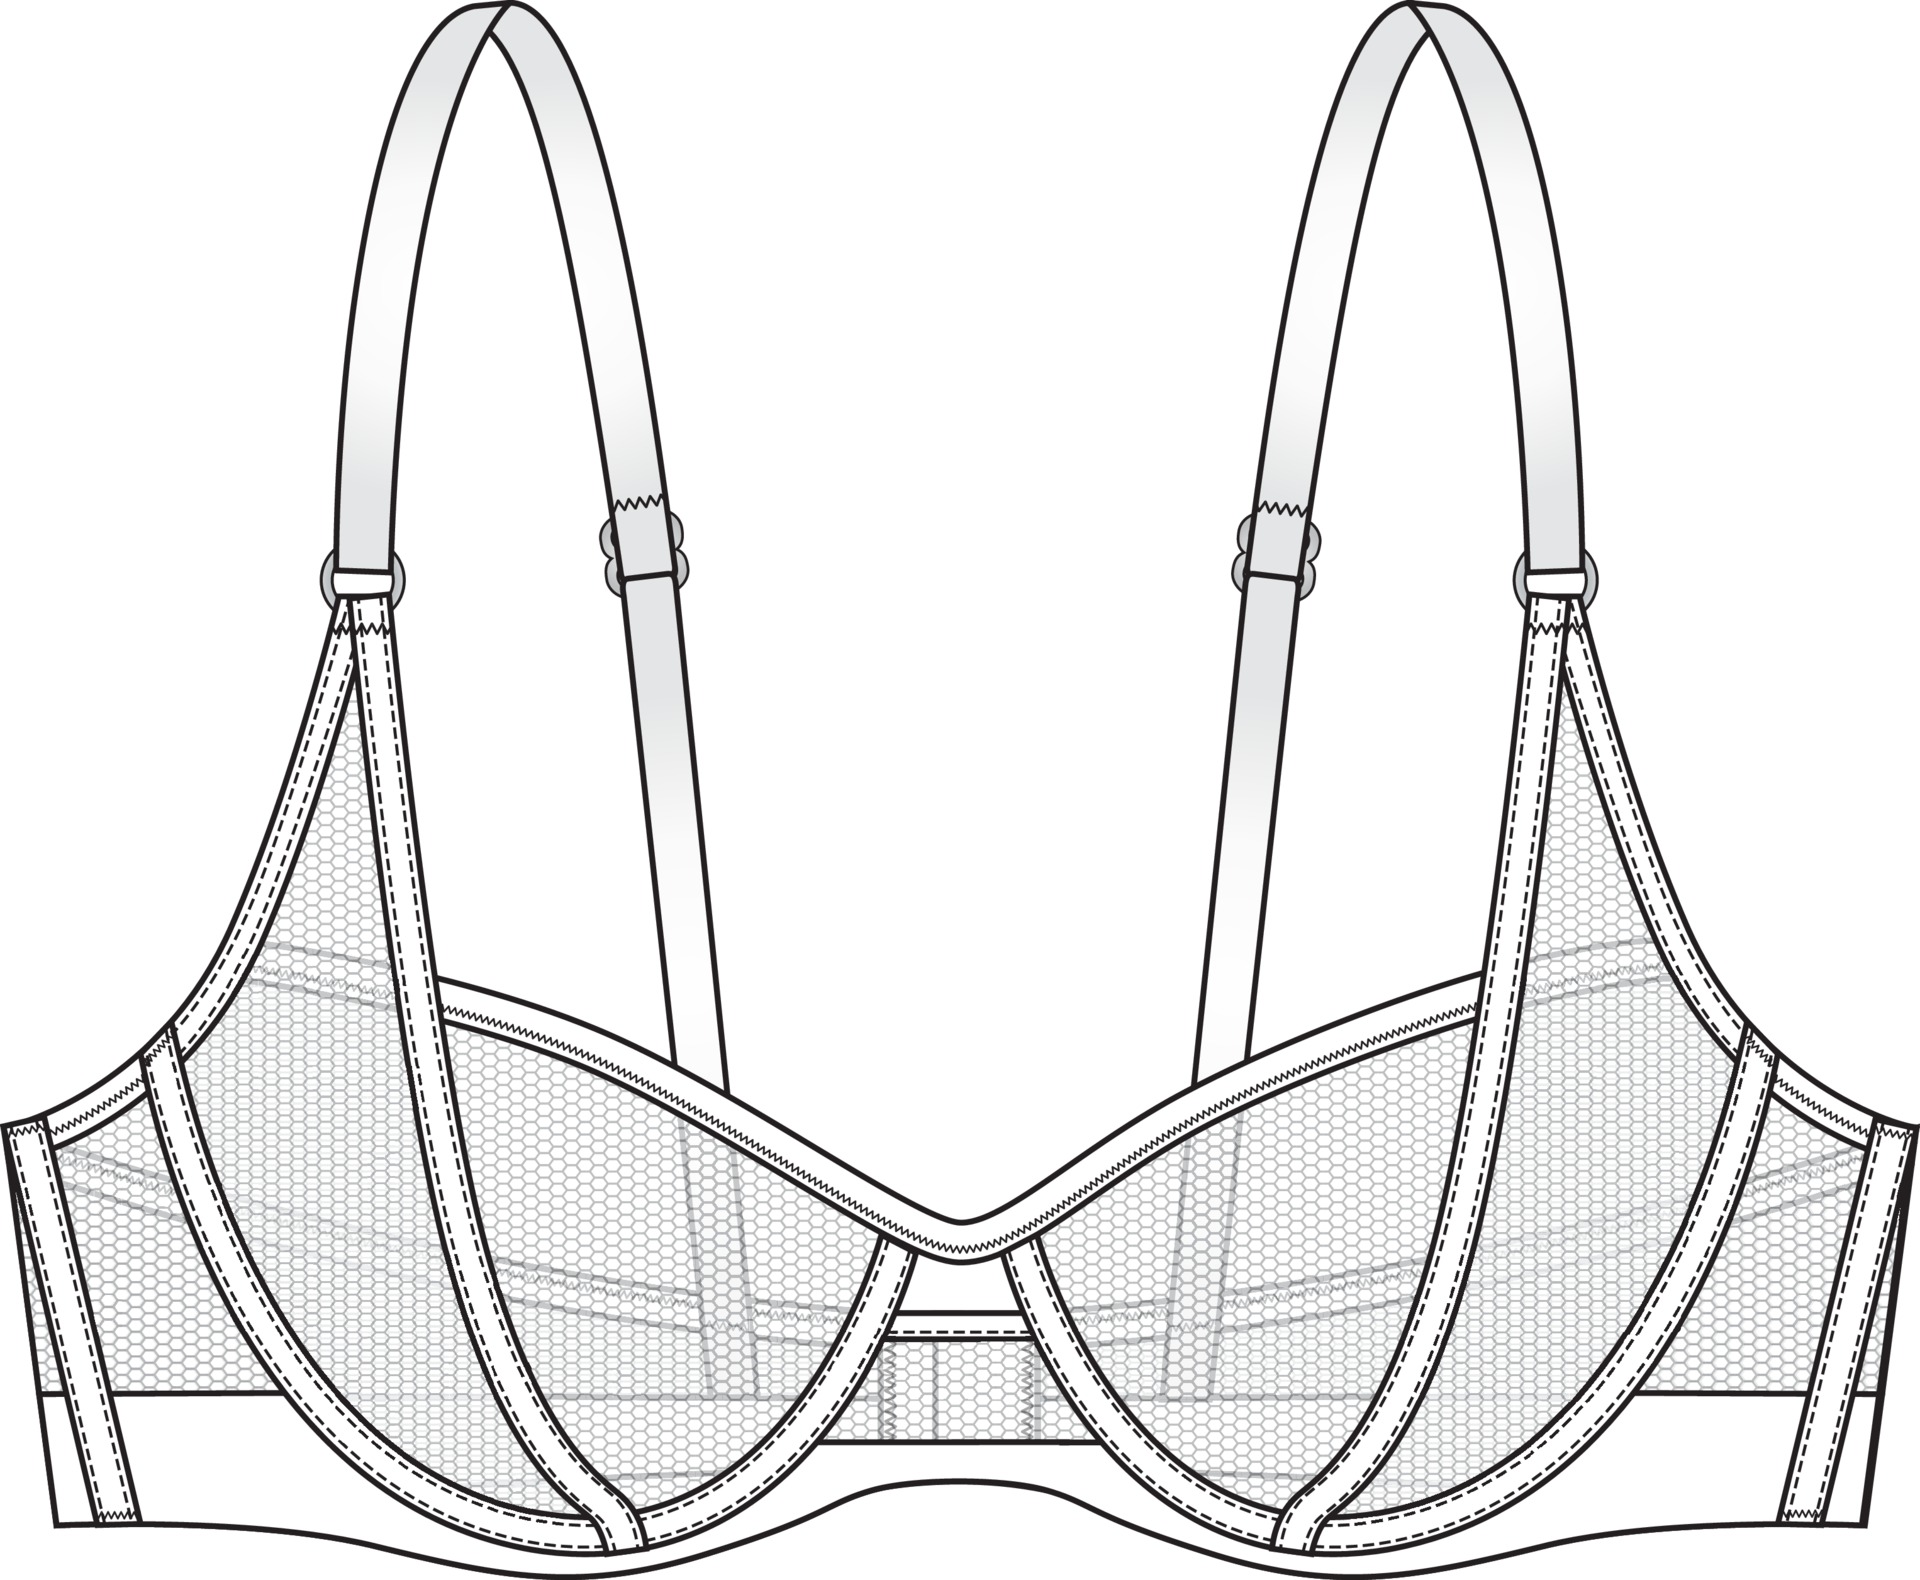 Mesh bra technical sketch. Editable lingerie flat fashion